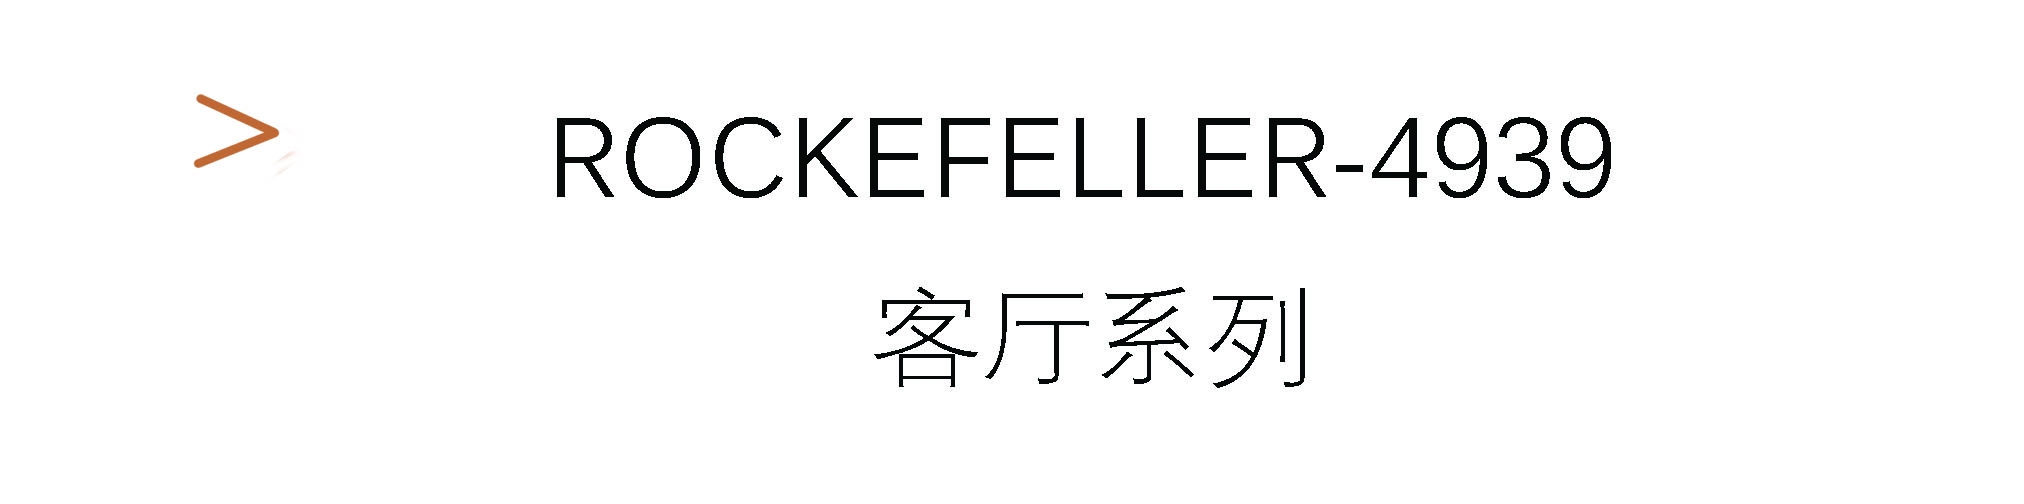 Rockefeller-4939